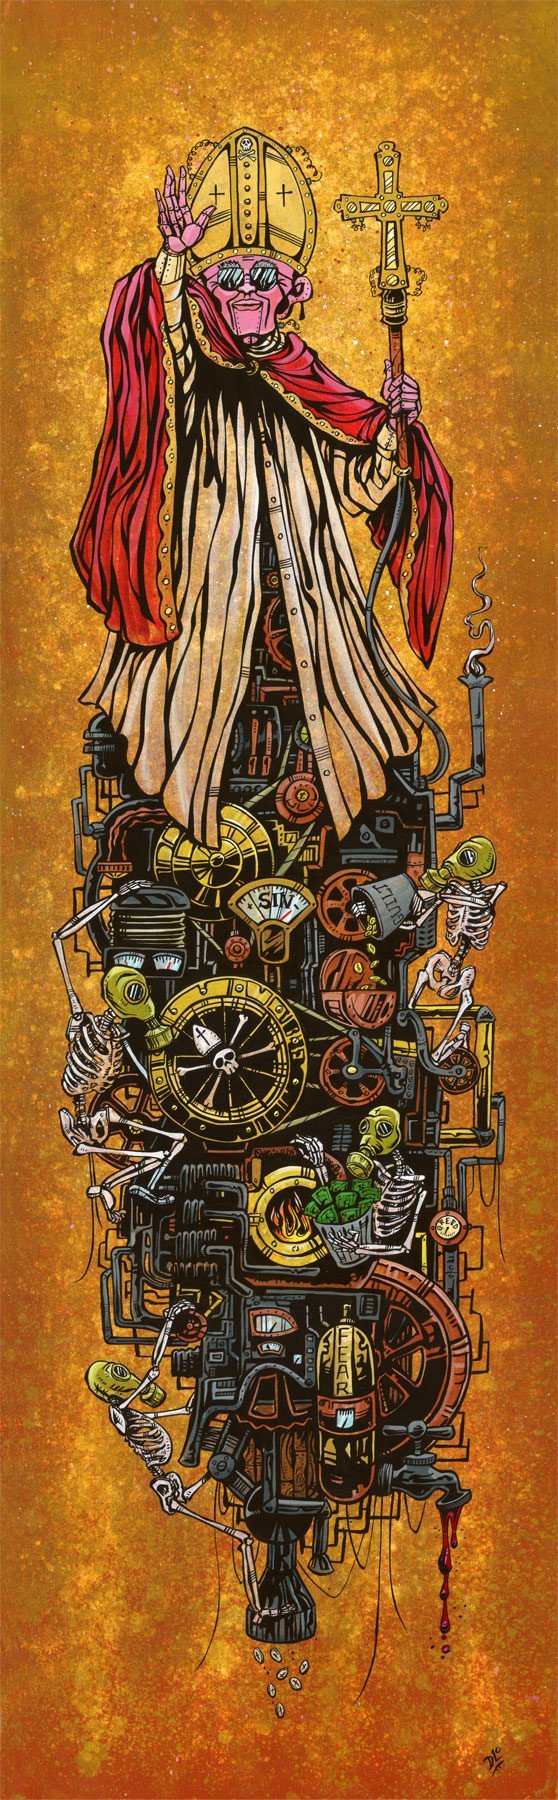 Supreme Machine by Day of the Dead Artist David Lozeau, Day of the Dead Art, Dia de los Muertos Art, Dia de los Muertos Artist